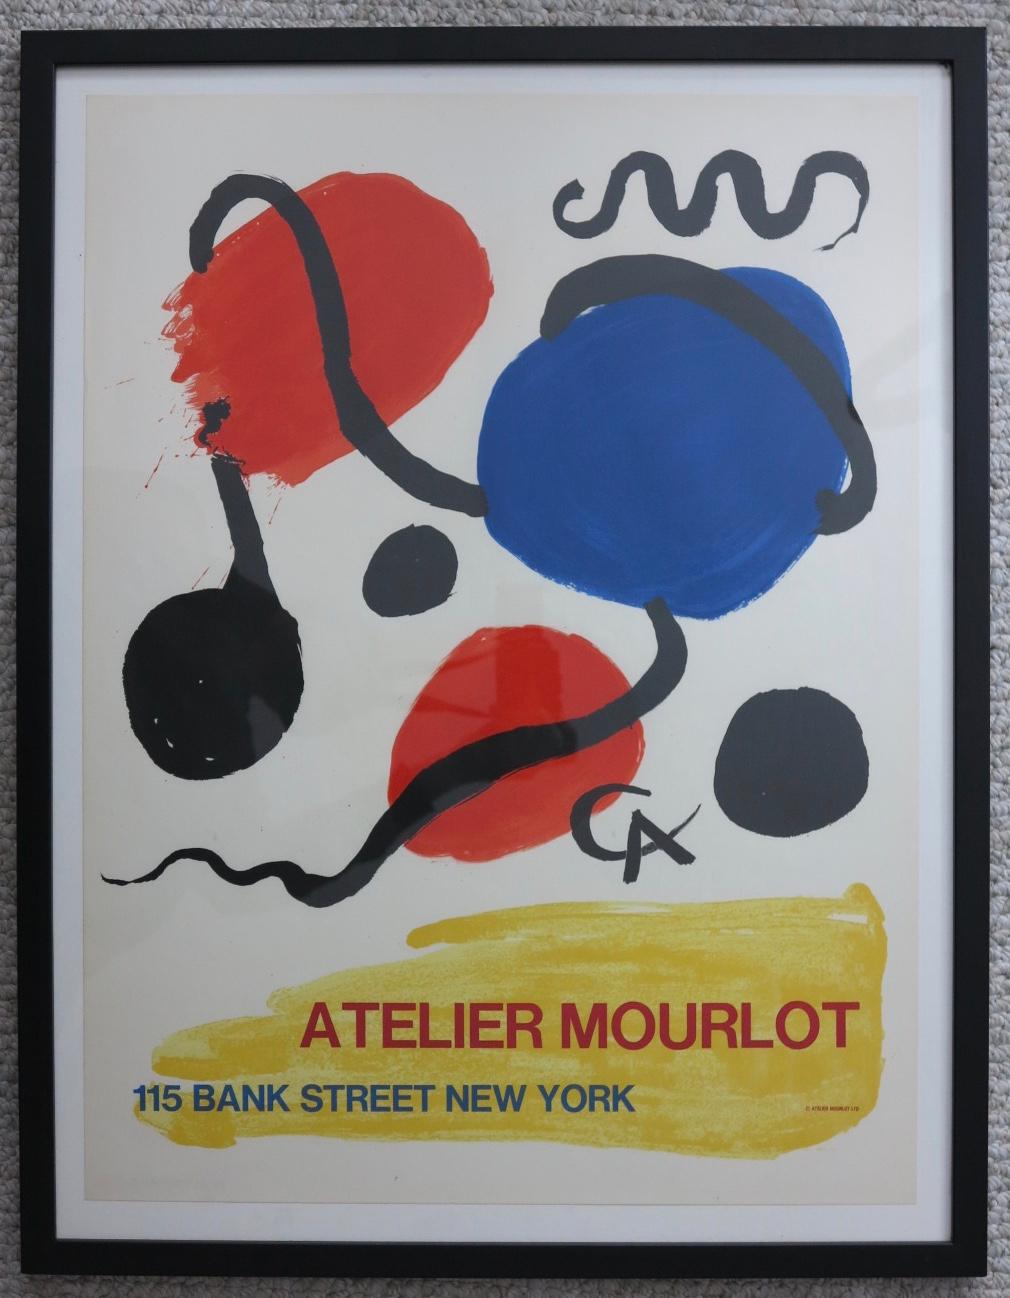 Atelier Mourlot 1967 lithograph poster - Print by Alexander Calder